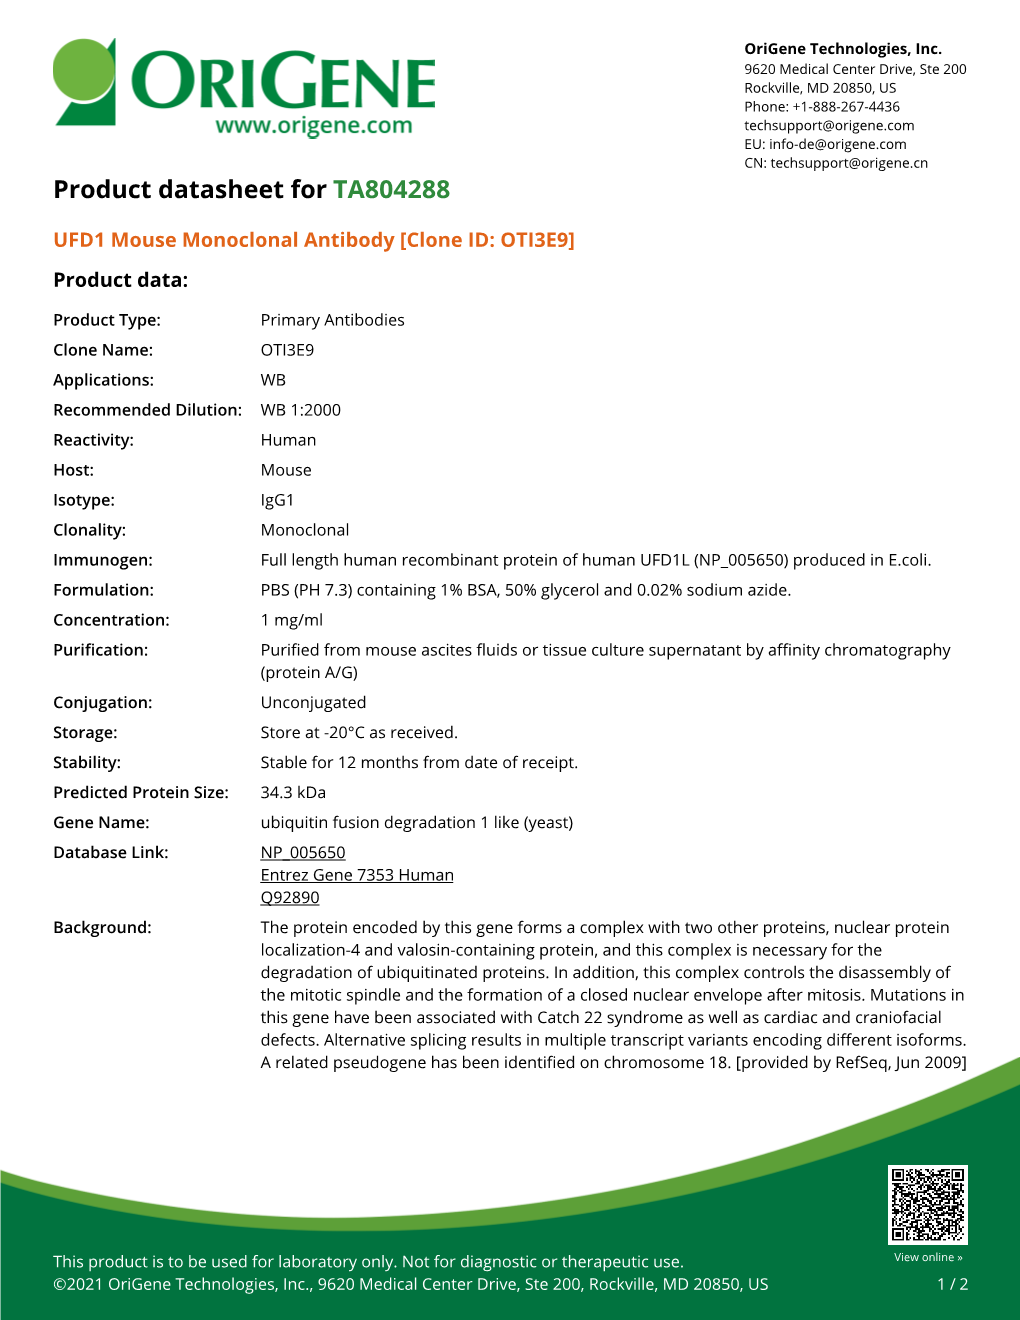 UFD1 Mouse Monoclonal Antibody [Clone ID: OTI3E9] Product Data